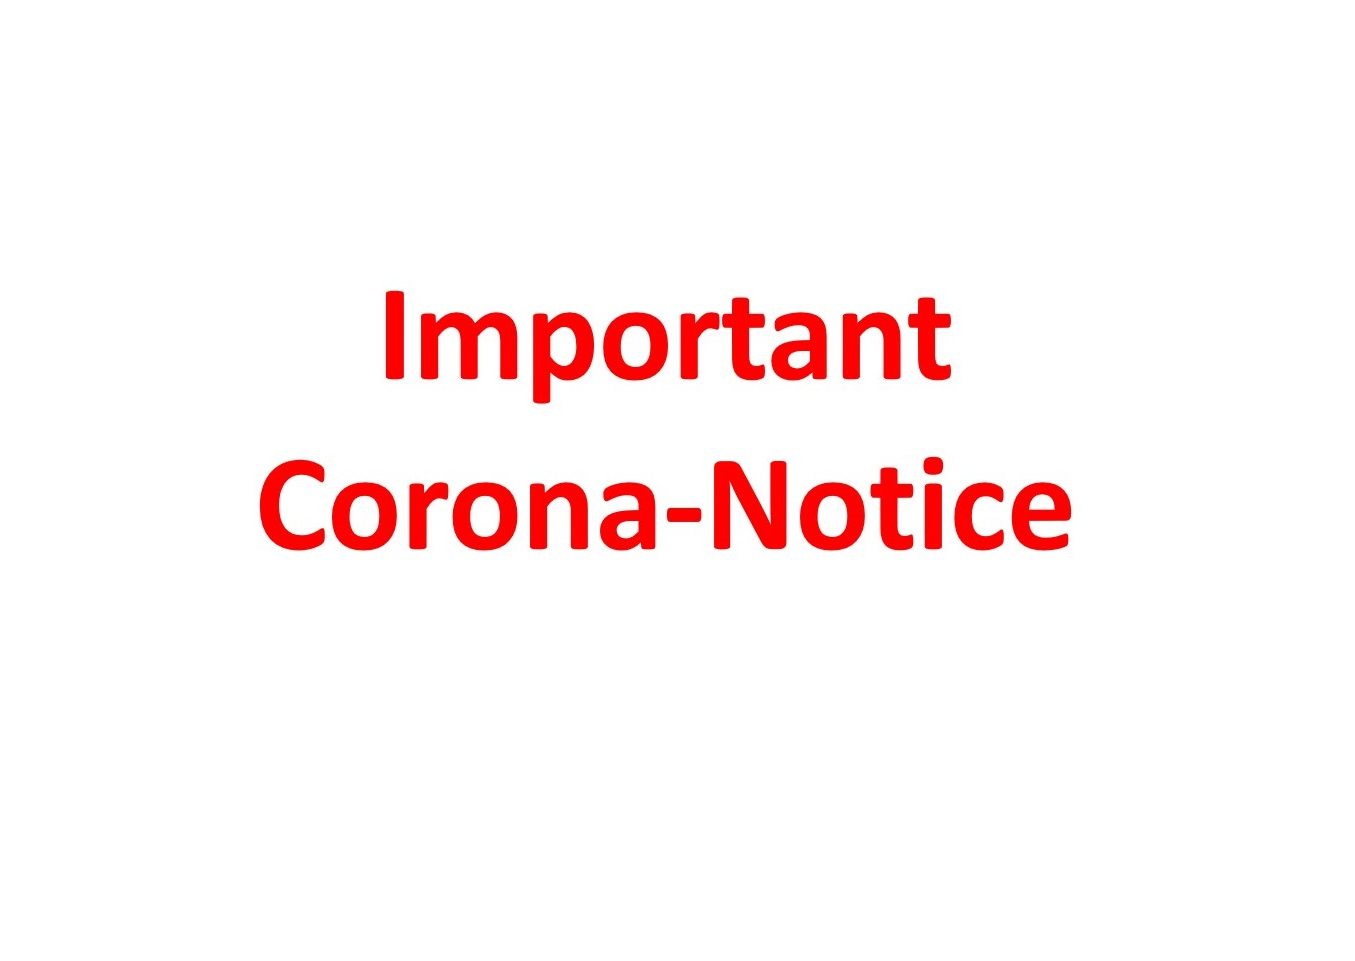 März 2020 - Important Corona-Notice